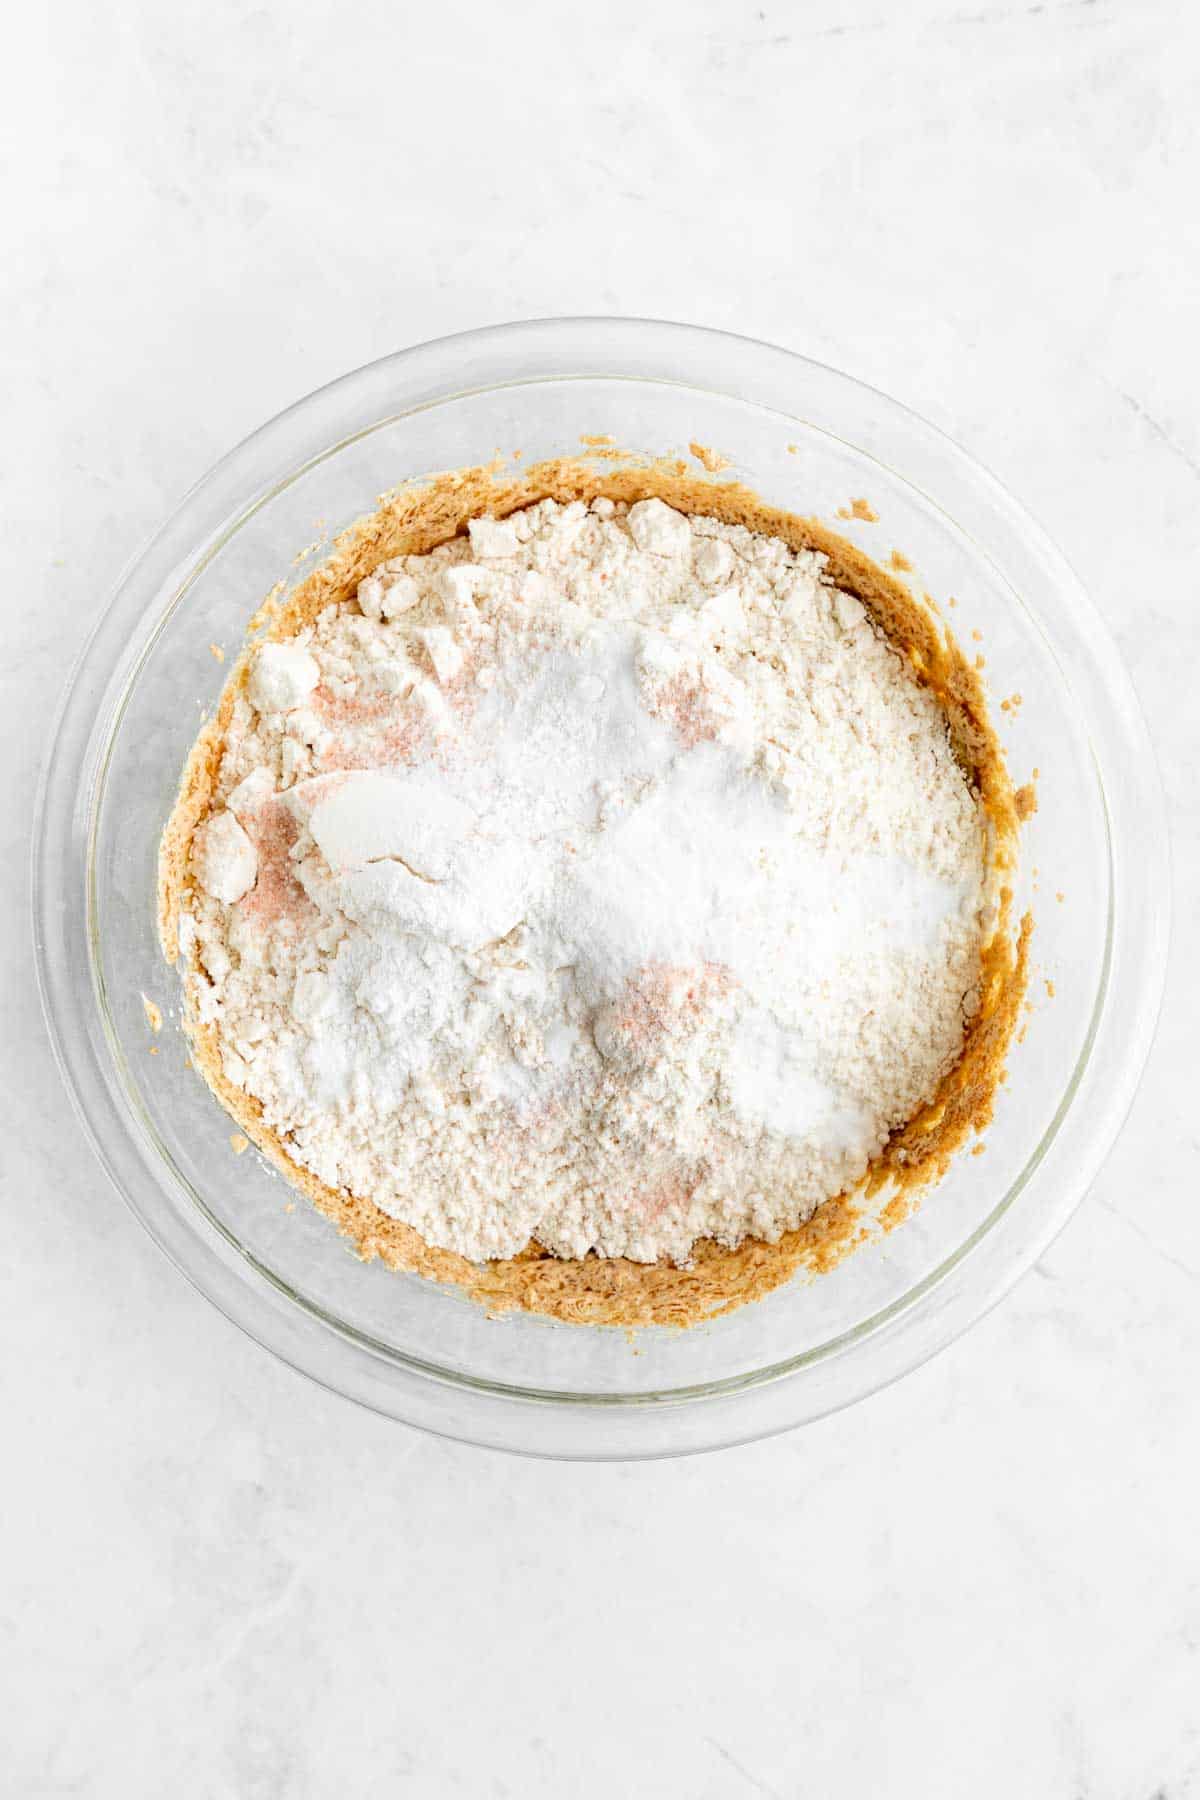 flour on top of wet cookie dough batter inside a glass bowl